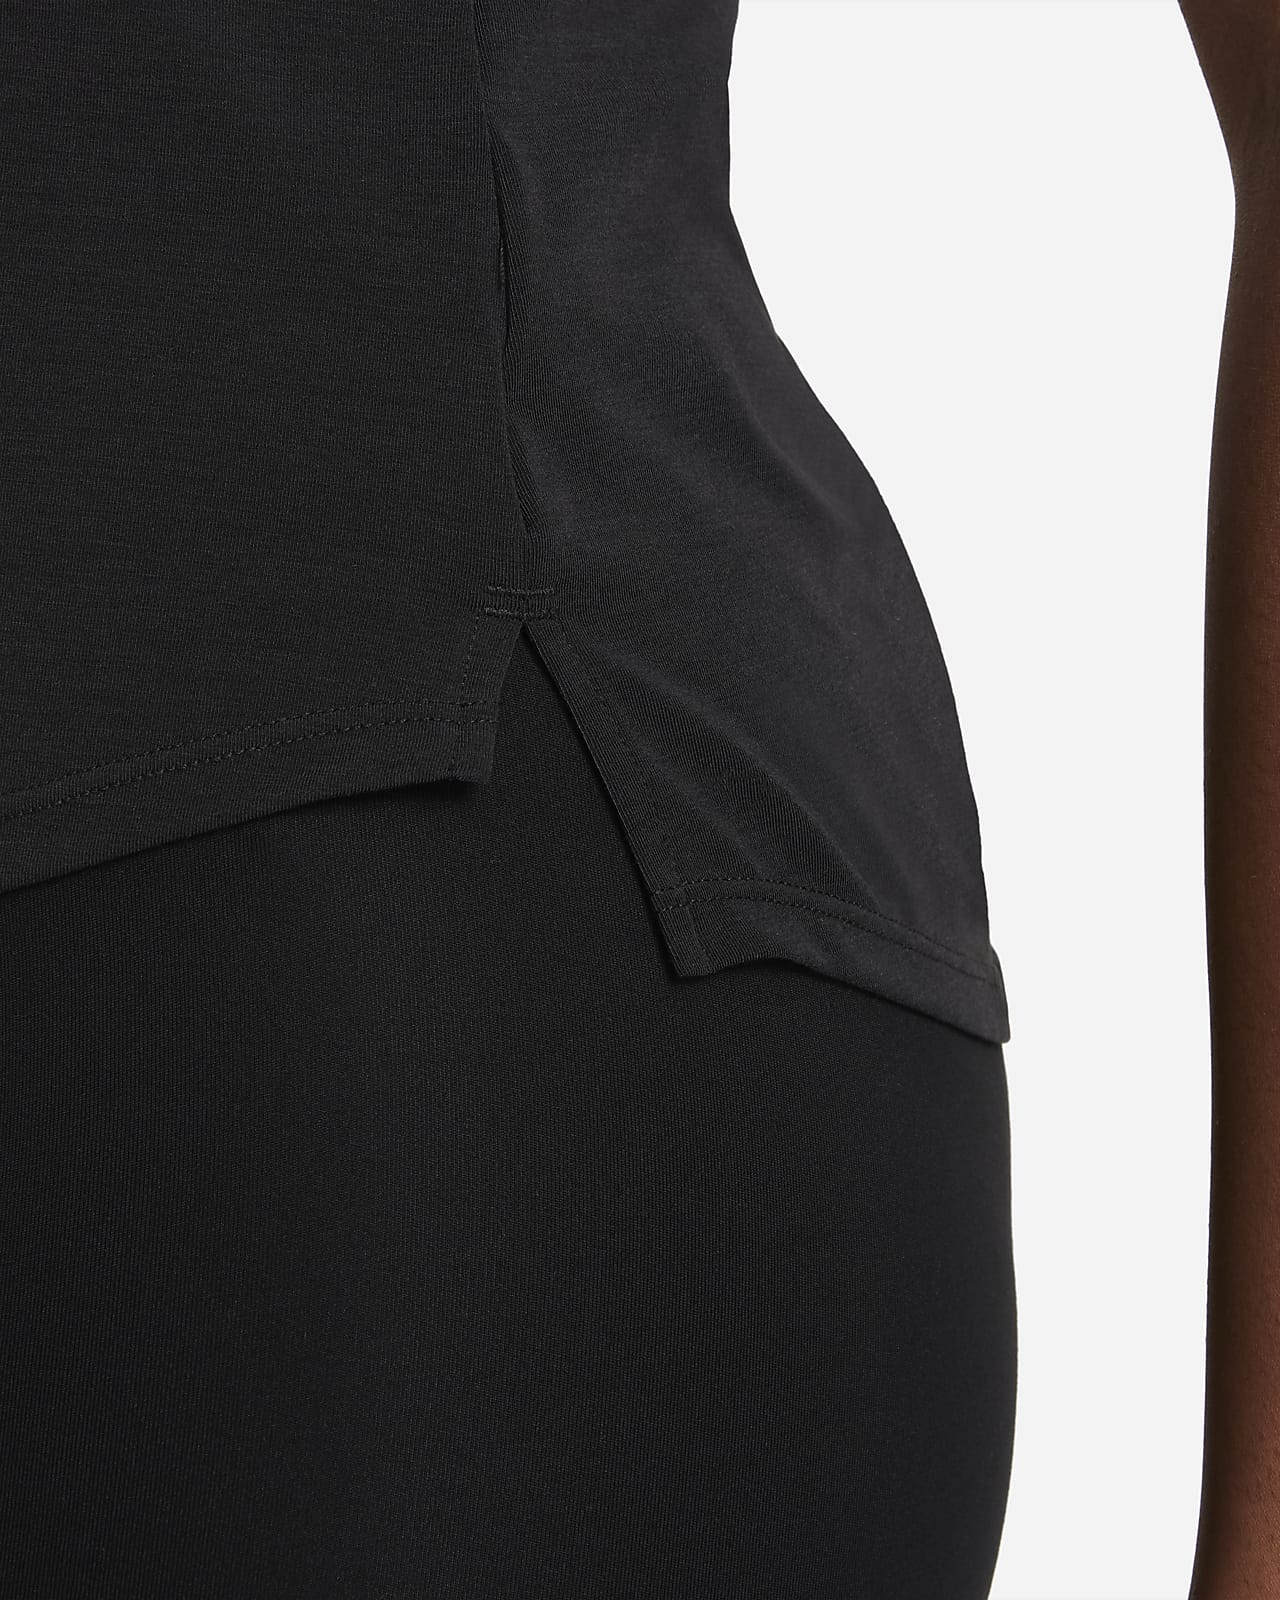 Nike Dri-FIT UV One Luxe Women\'s Standard Fit Short-Sleeve Top.